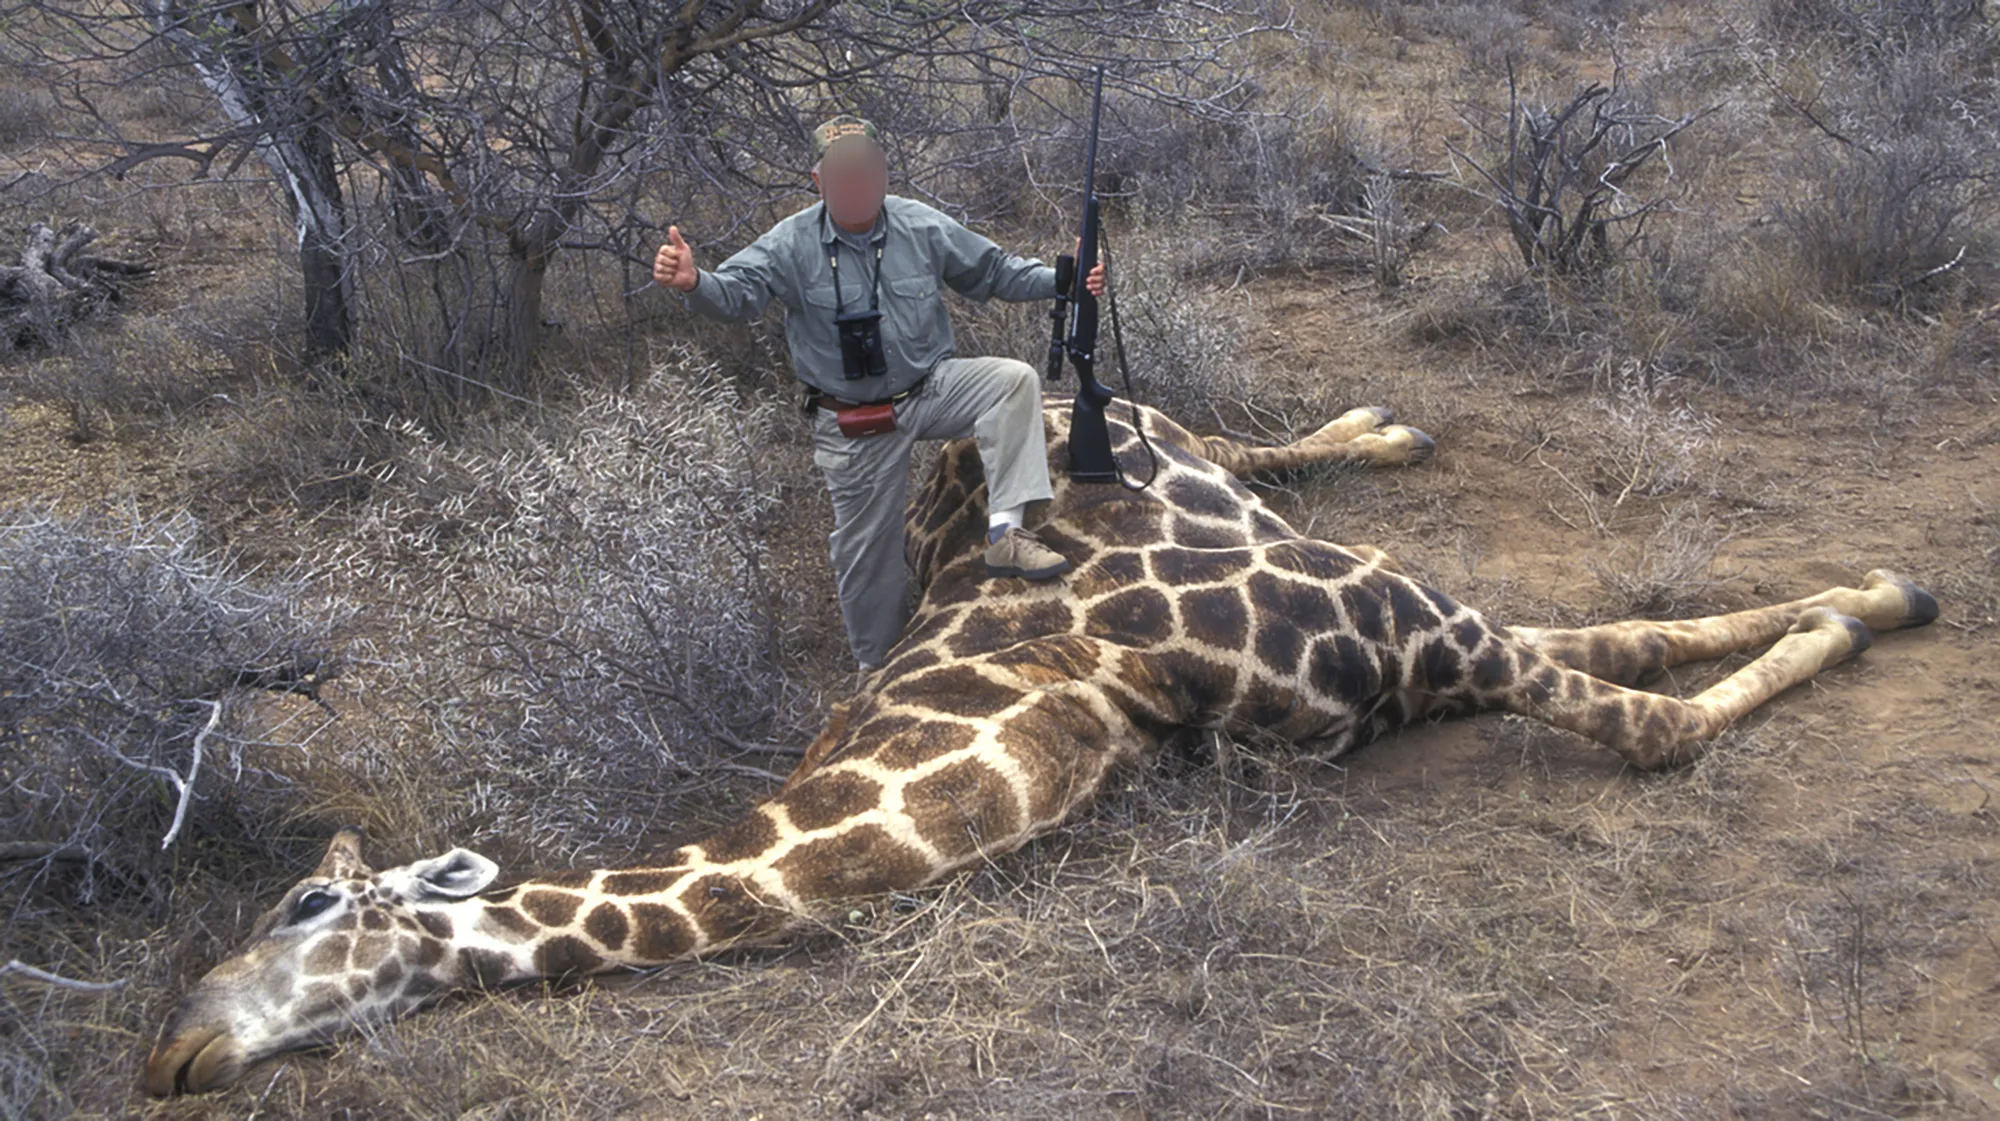 South Africa's war on wild animals South Africa's war o...